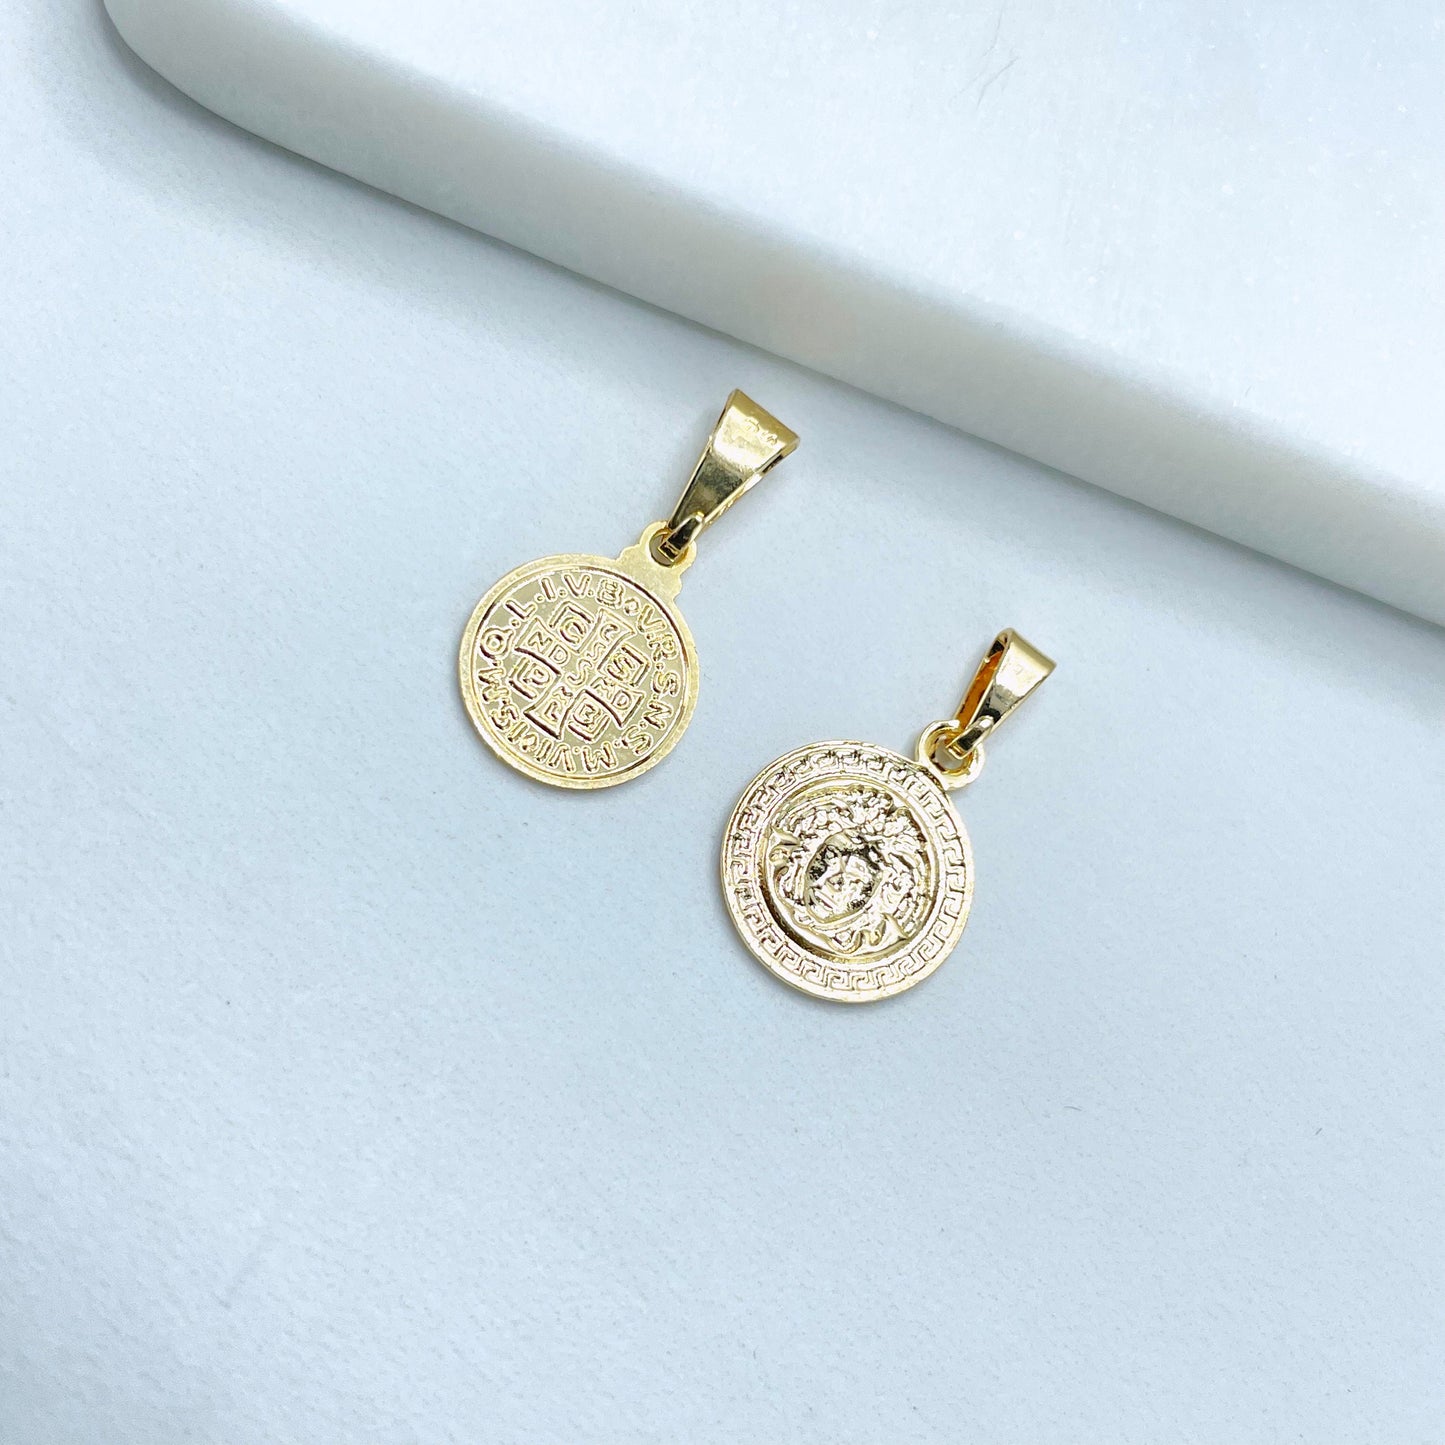 18k Gold Filled Medusa Greek Mythology Medal Charm or Amulet "Virtute Tva Fiat Pax in" Medal Charm, Wholesale Jewelry Making Supplies